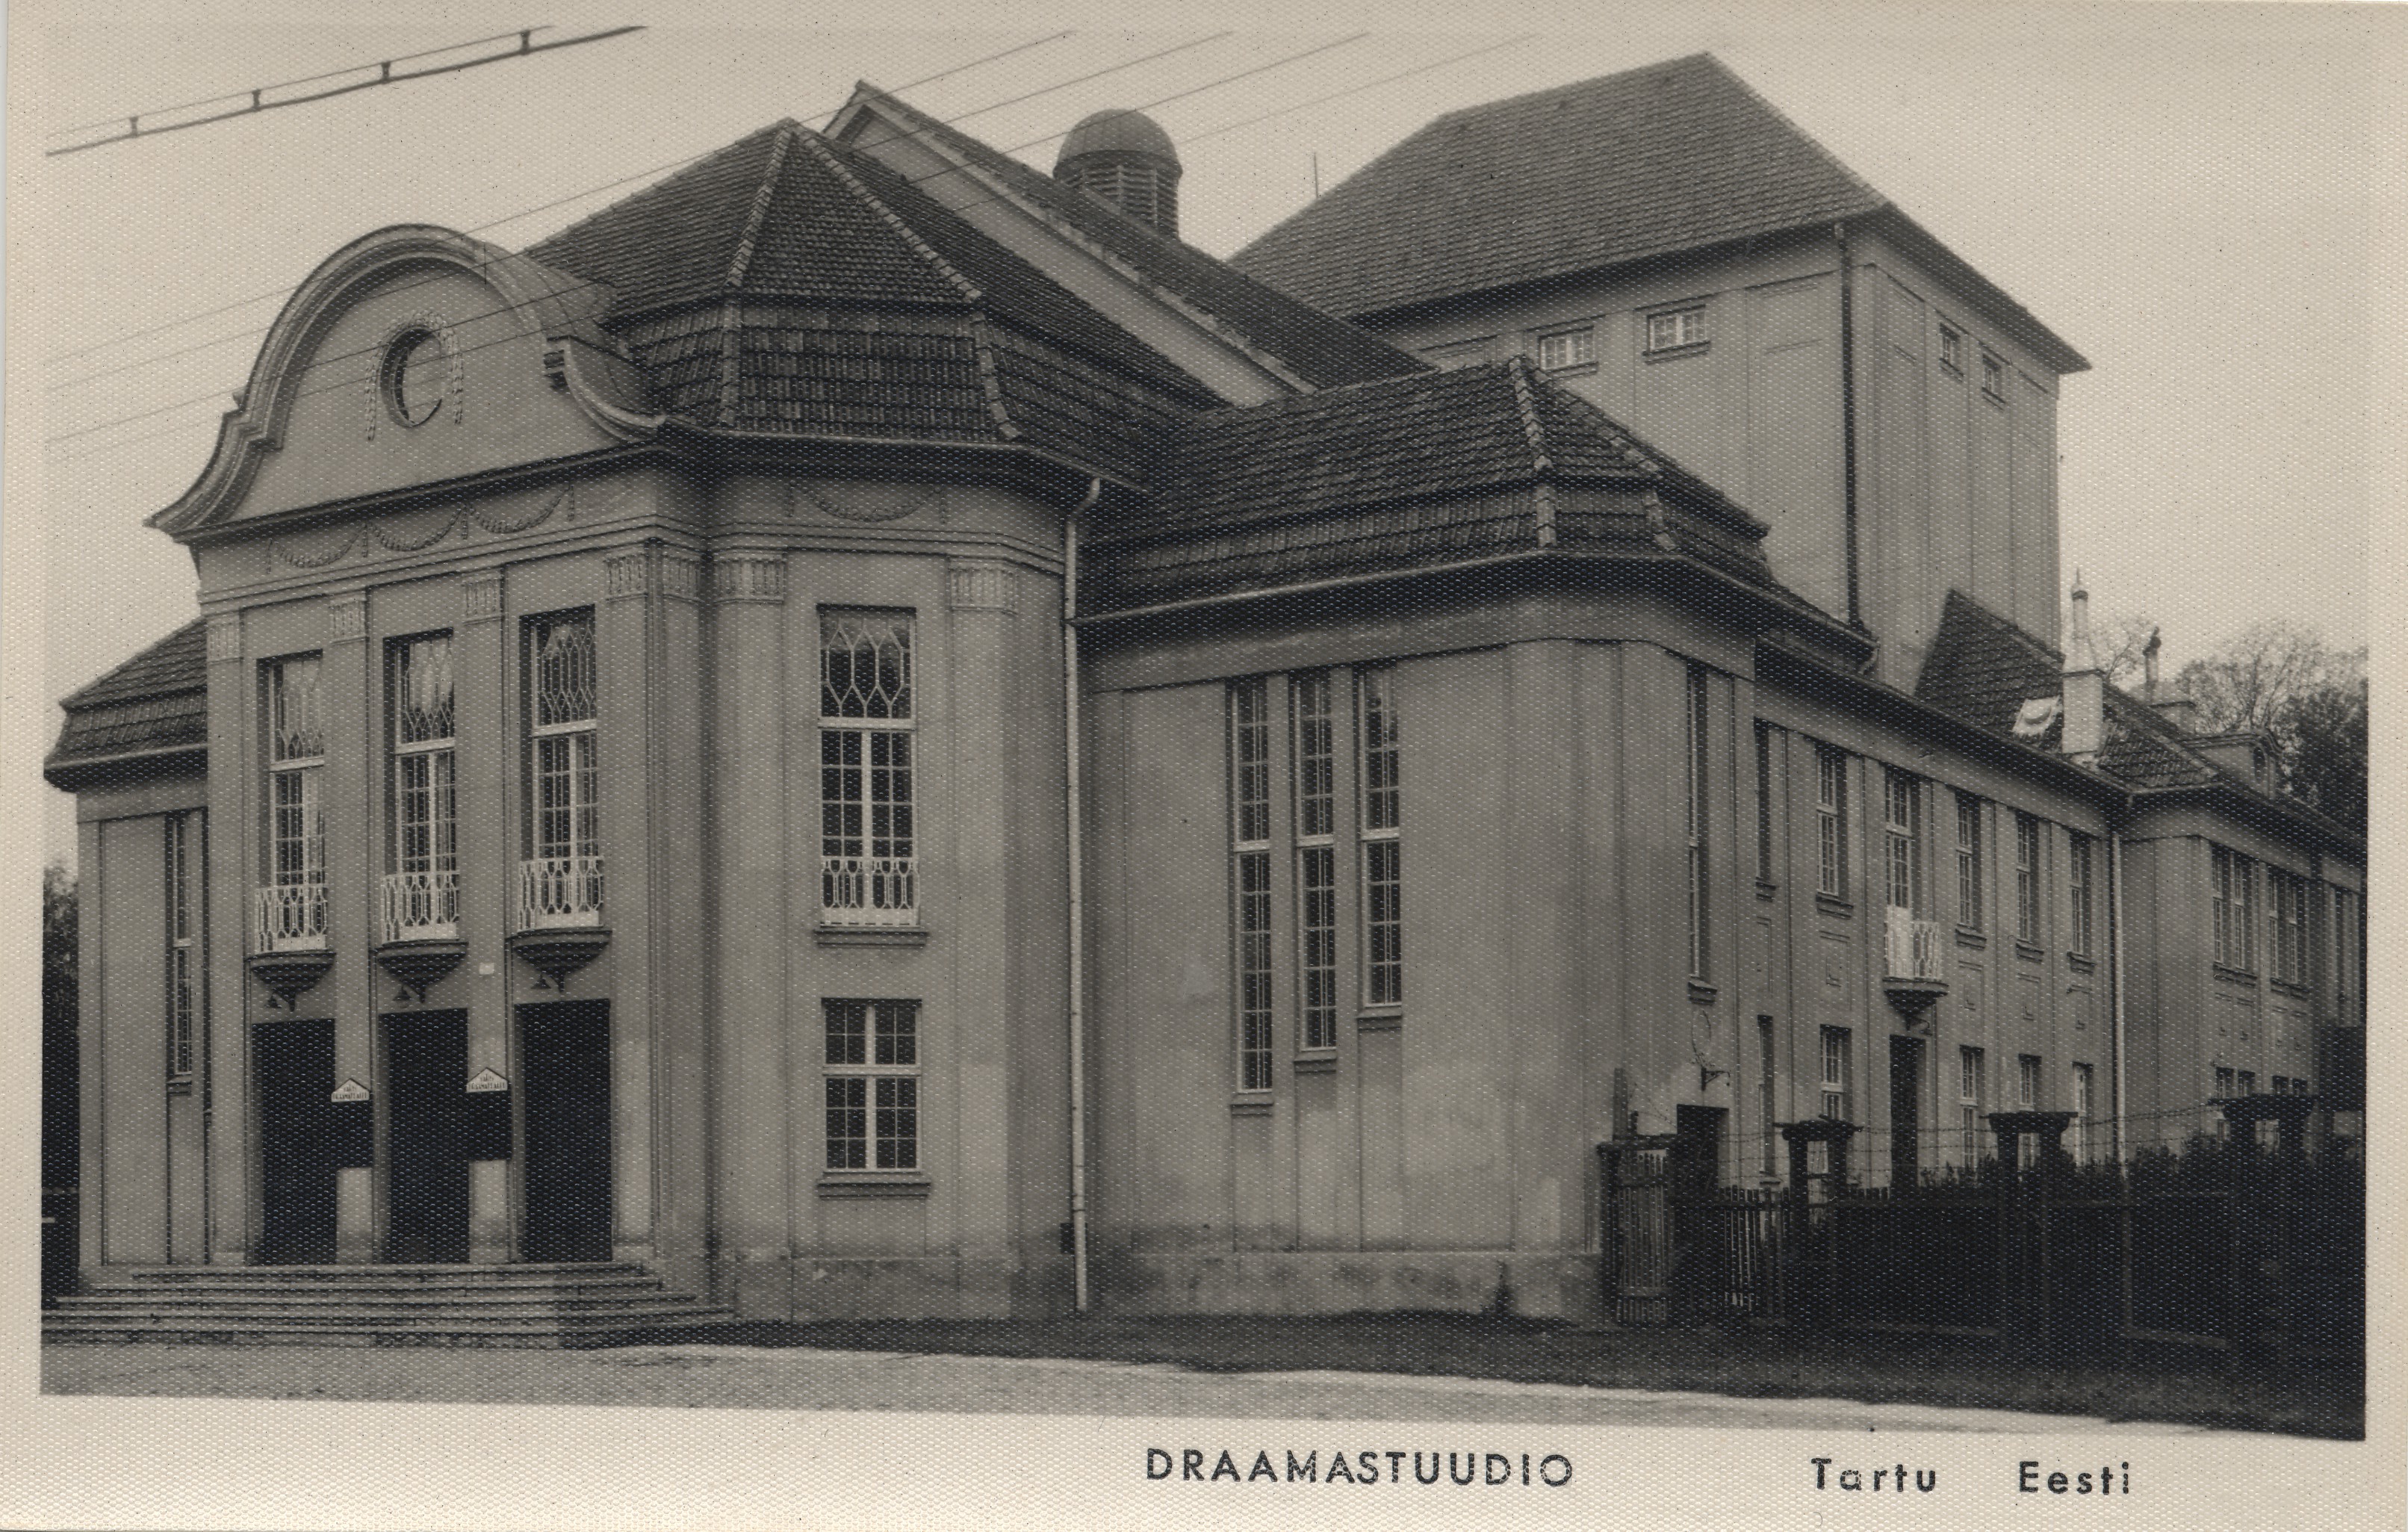 Tartu Estonia : Drama studio